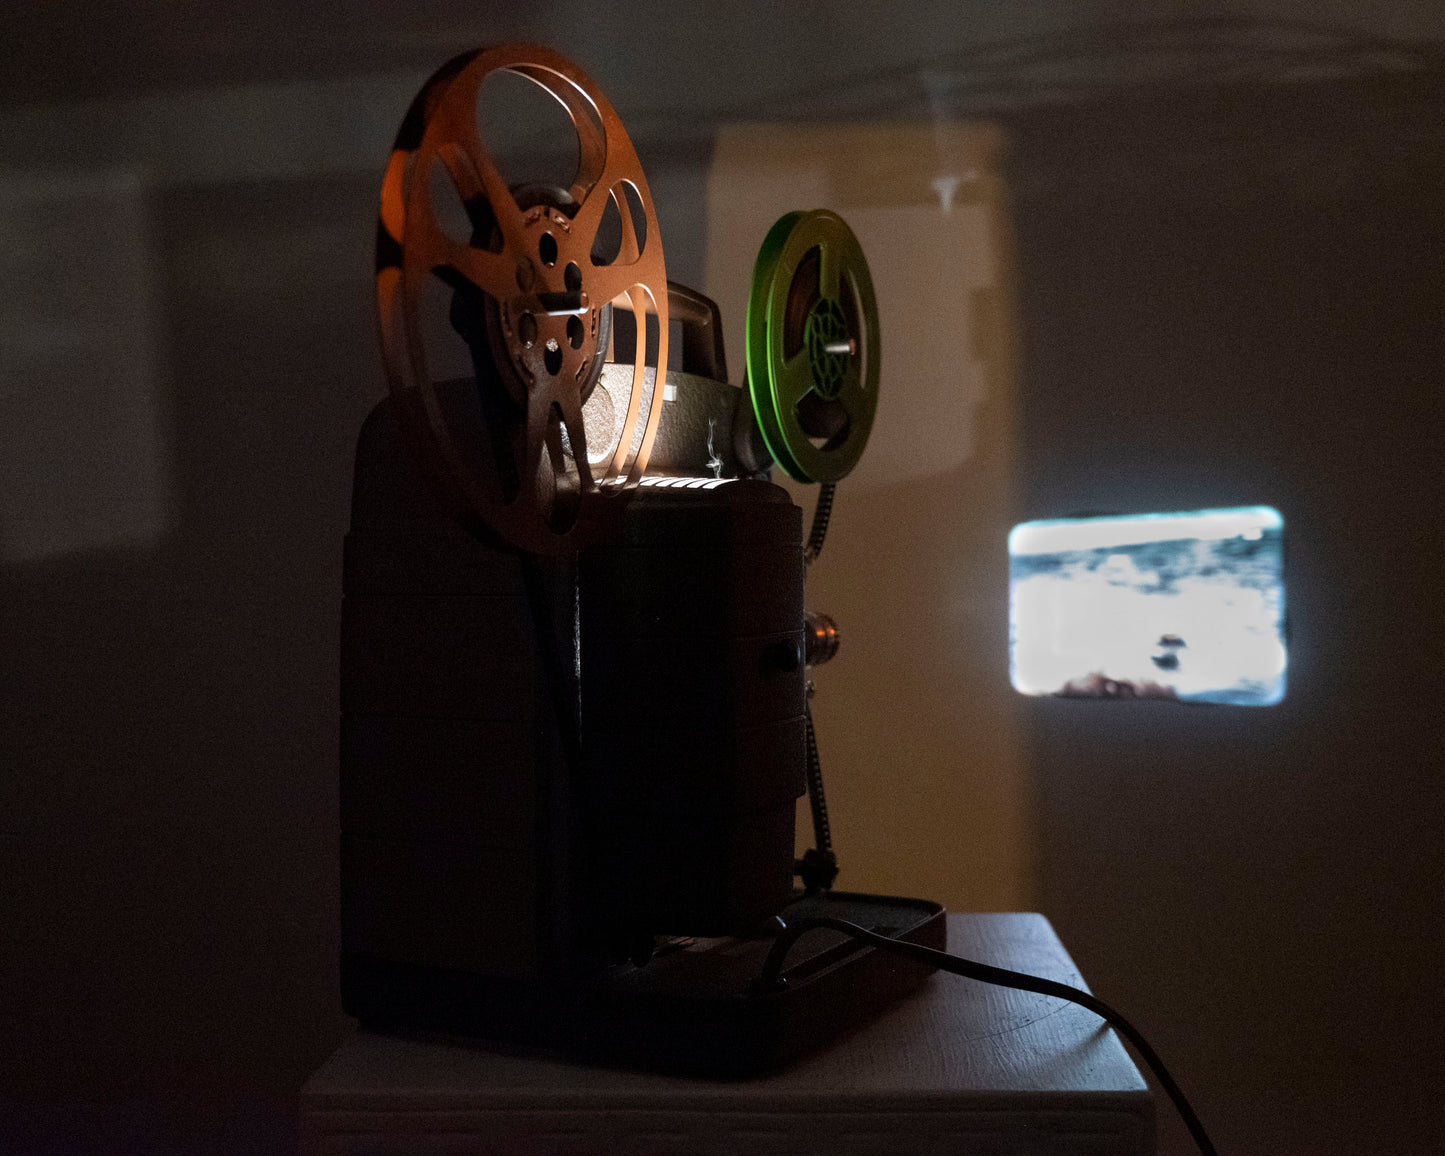 Projecteur de cinéma Bell et Howell 253 AX Regular 8 (série F77082)